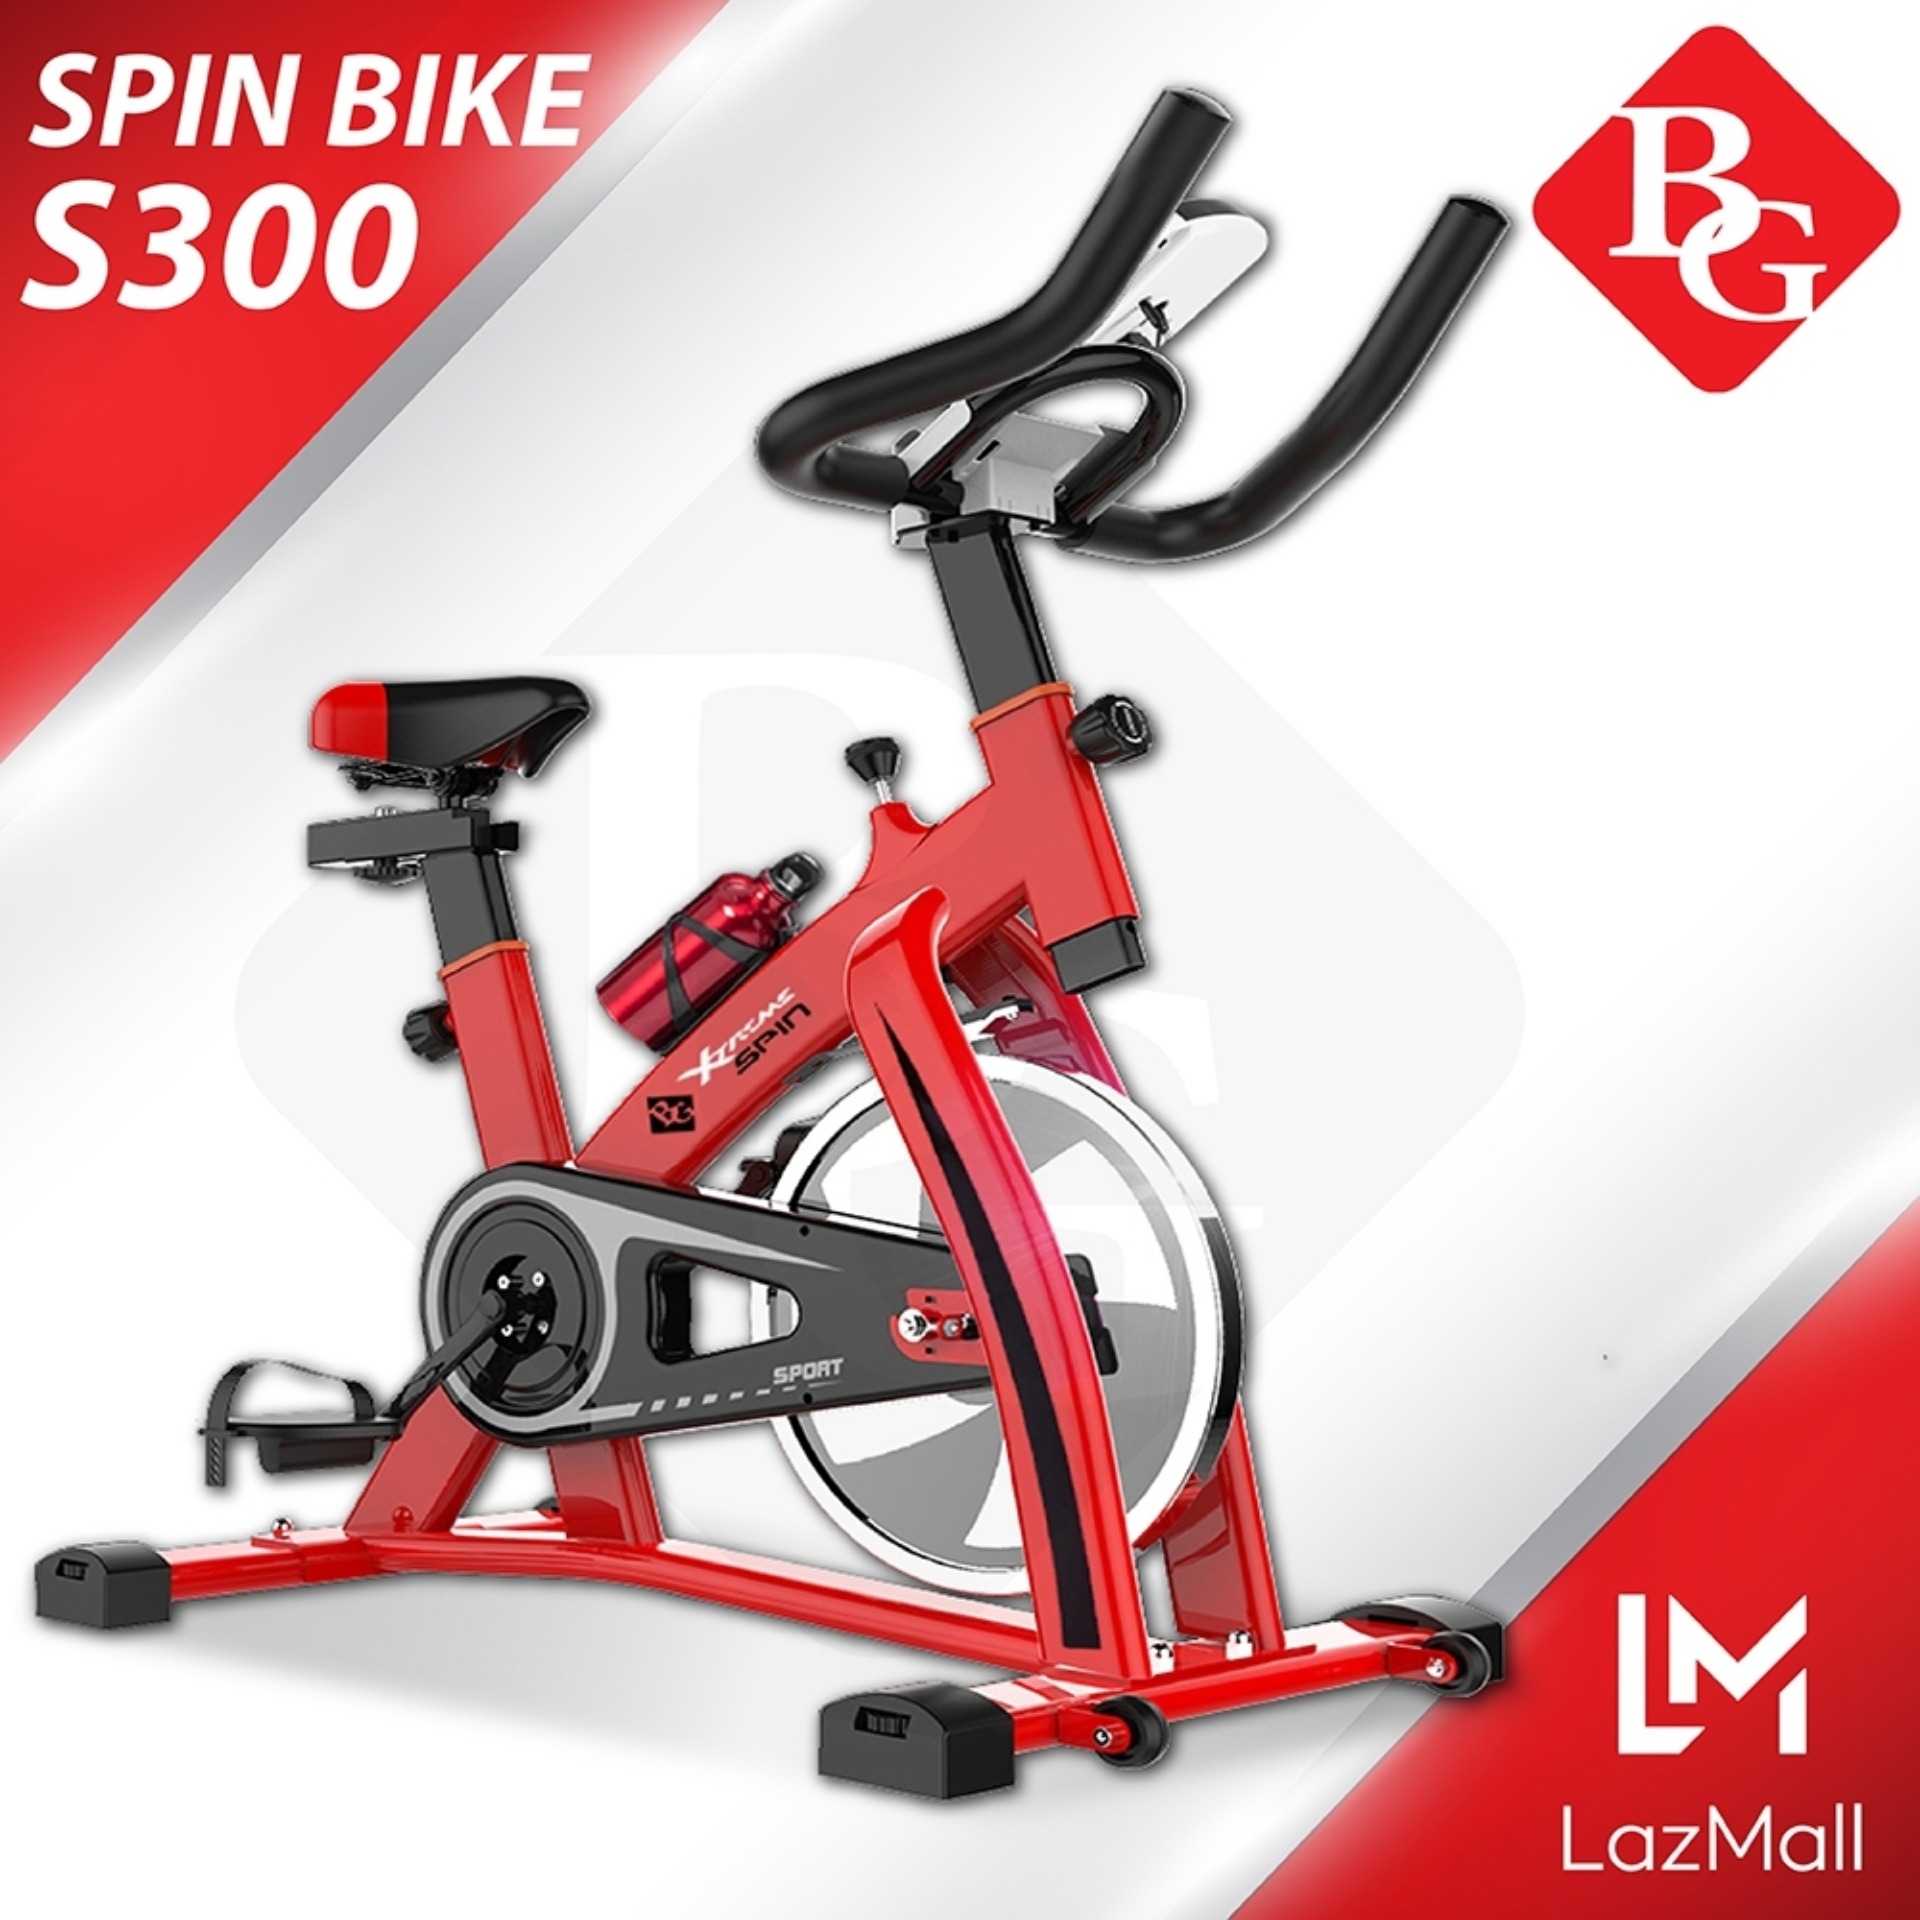 B&G Exercise Bike จักรยานออกกำลังกาย Spin Bike พร้อมหน้าจอ LED แสดงผลการทำงาน S300 (Red)